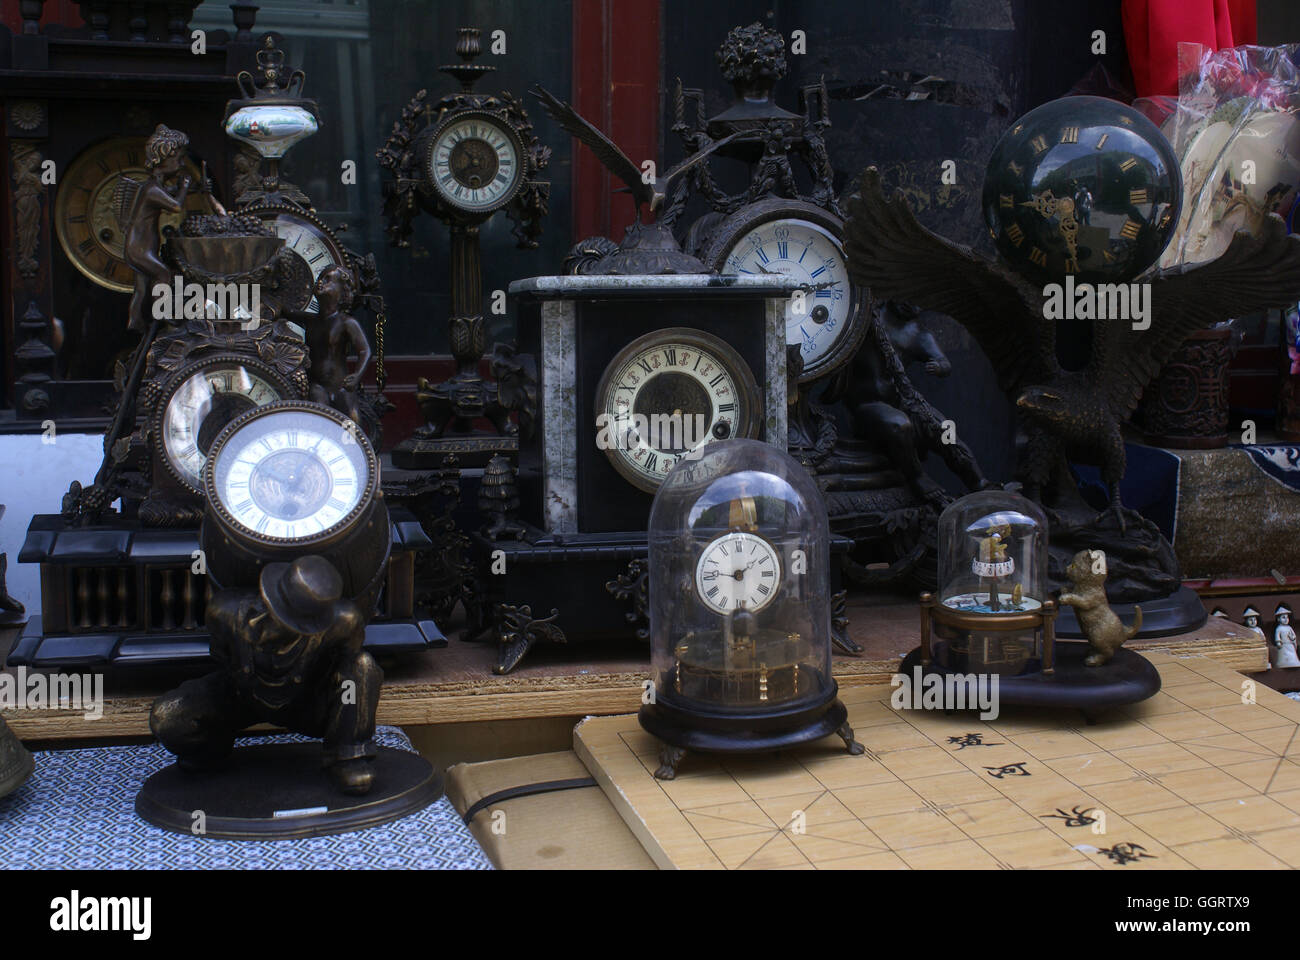 Reproduction antique clocks at the Panjiayuan Flea Market. Beijing - China. Stock Photo